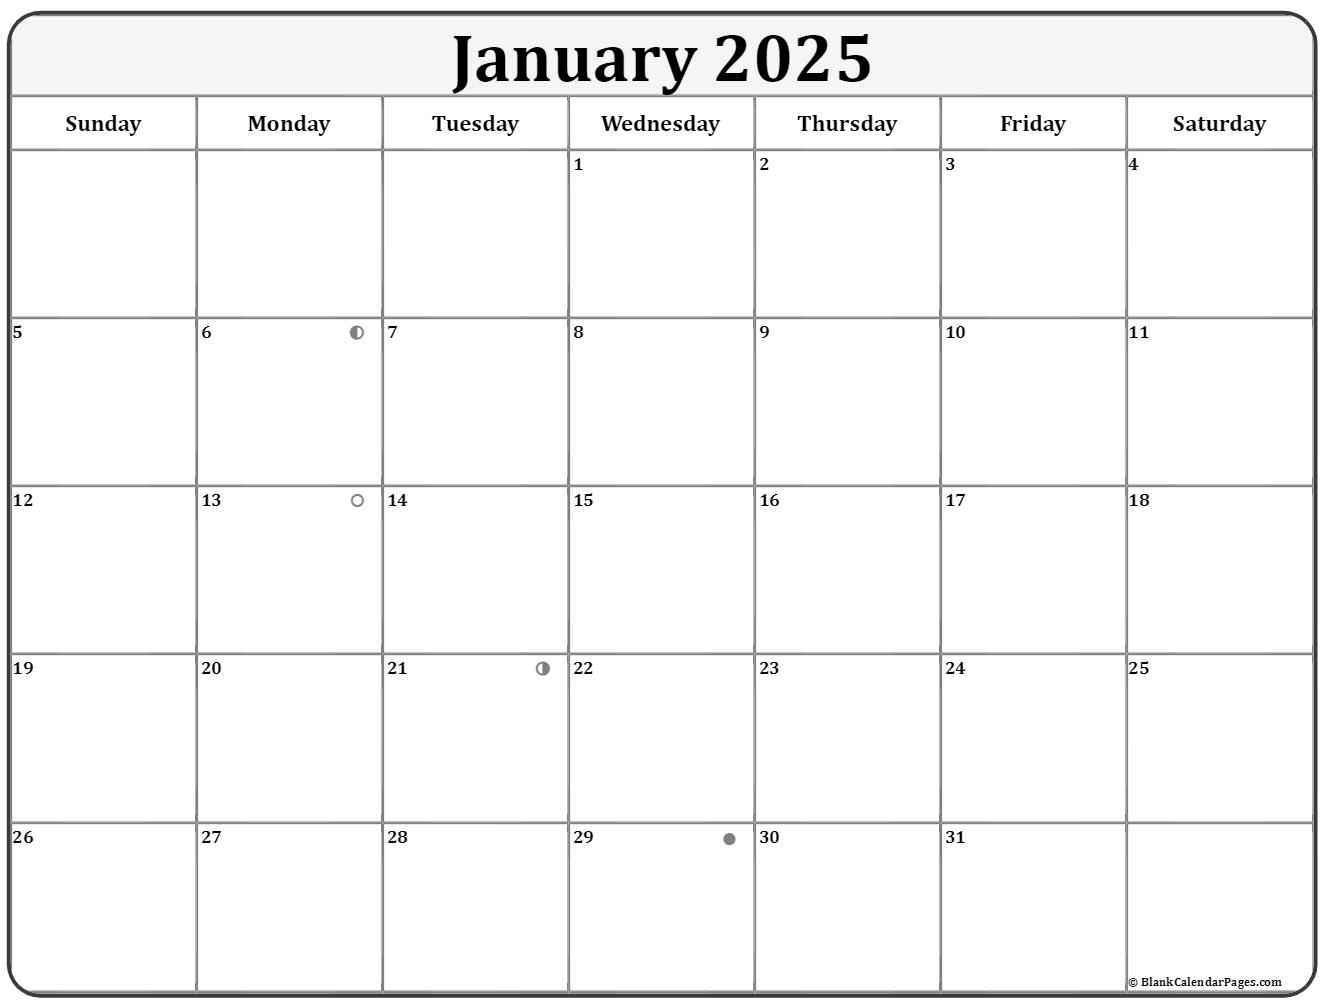 January 2025 Lunar Calendar